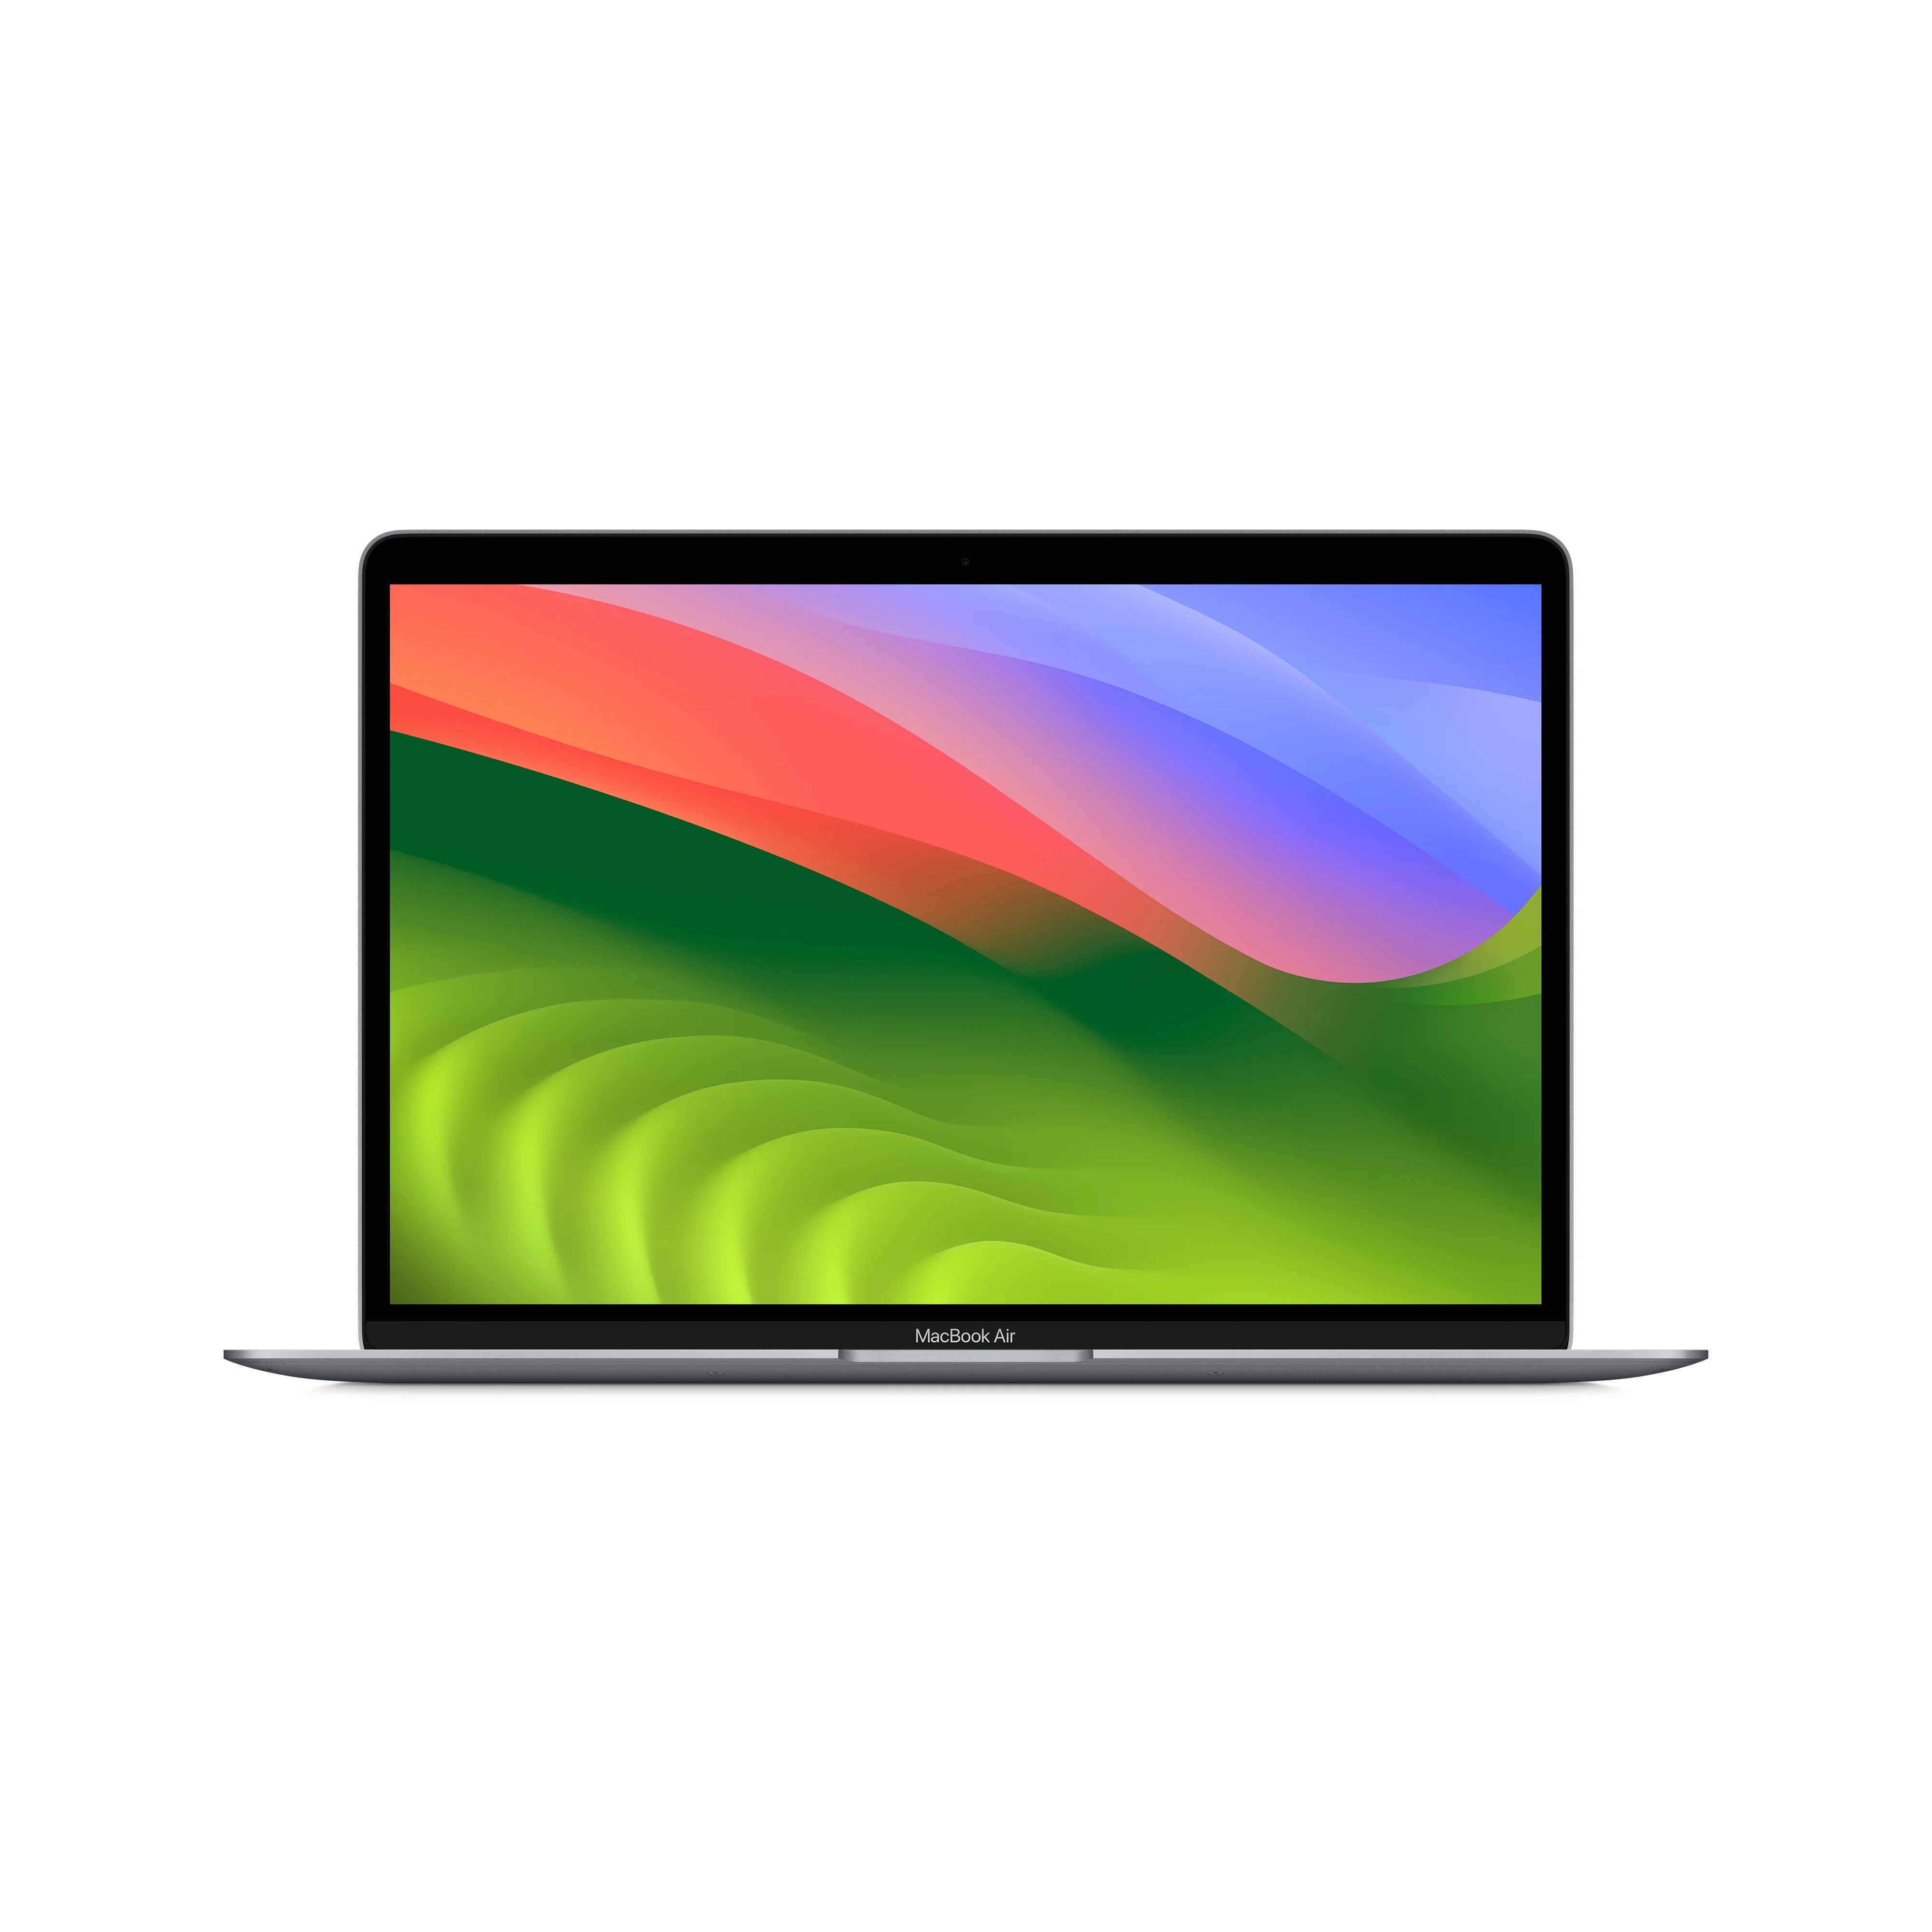 Apple MacBook Air 13.3 inch Laptop - Space Gray. M1 Chip, 8GB RAM, 256GB storage | Walmart (US)